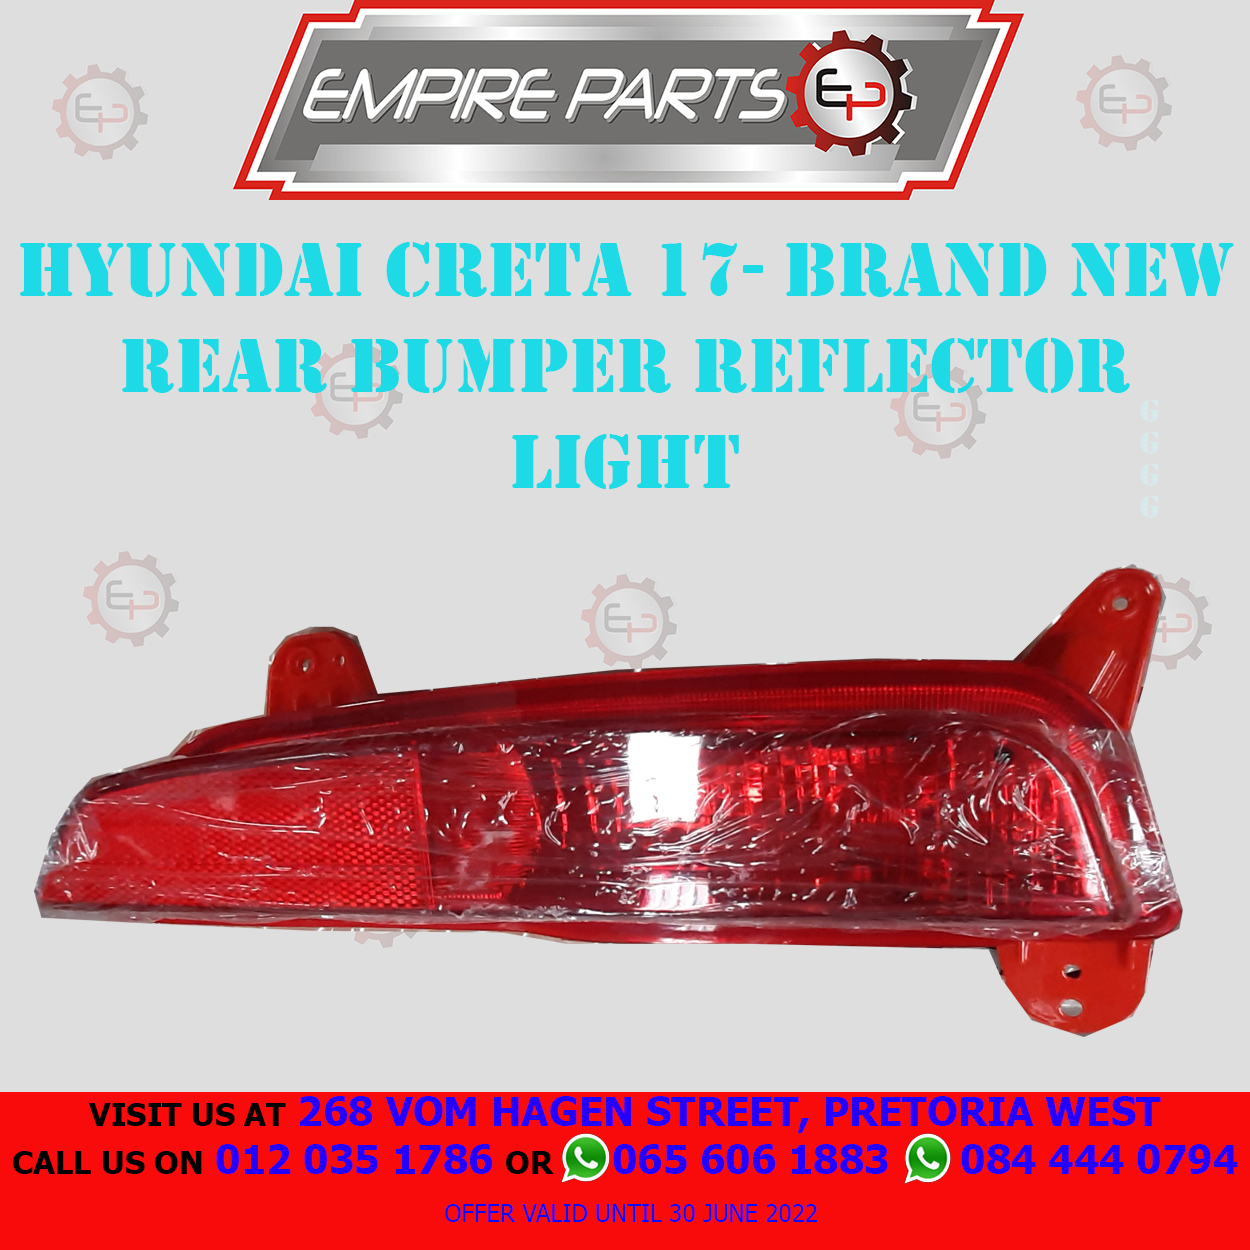 Hyundai creta 17- brand new rear bumper reflector